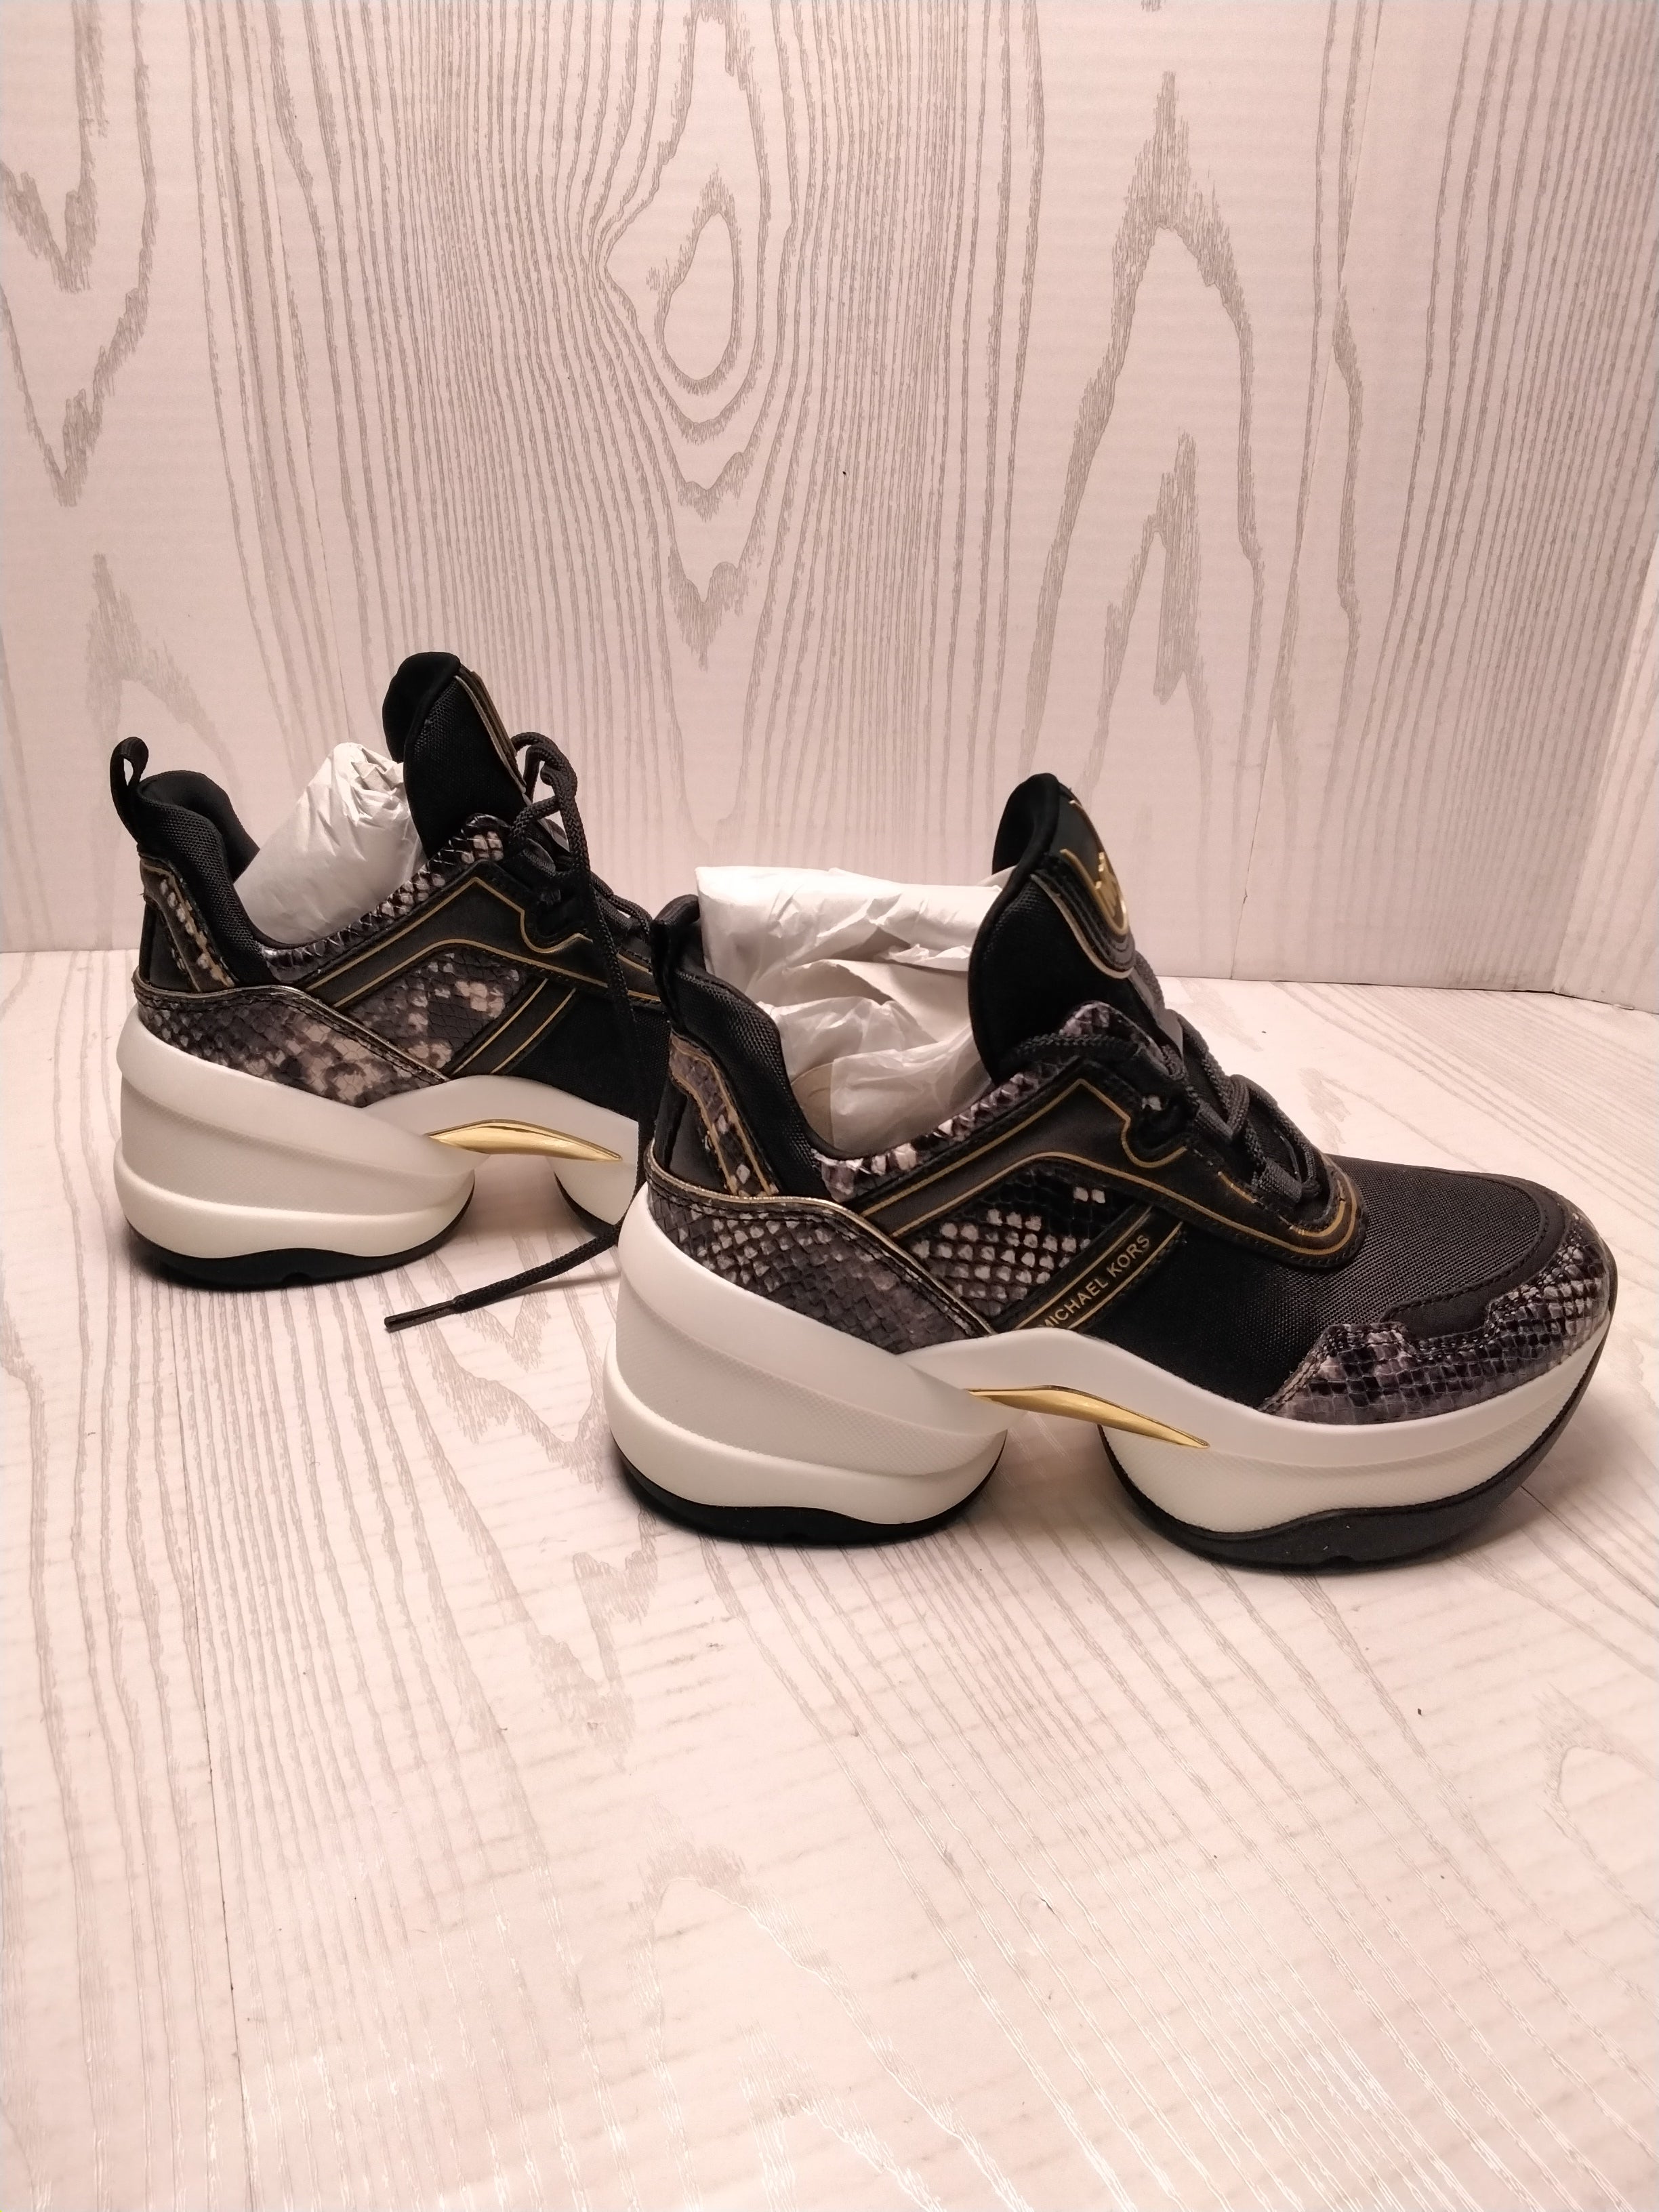 Michael Kors Women's Olympia Trainer Tech Canvas Shoes - Black, Size 5.5 (7928683462894)